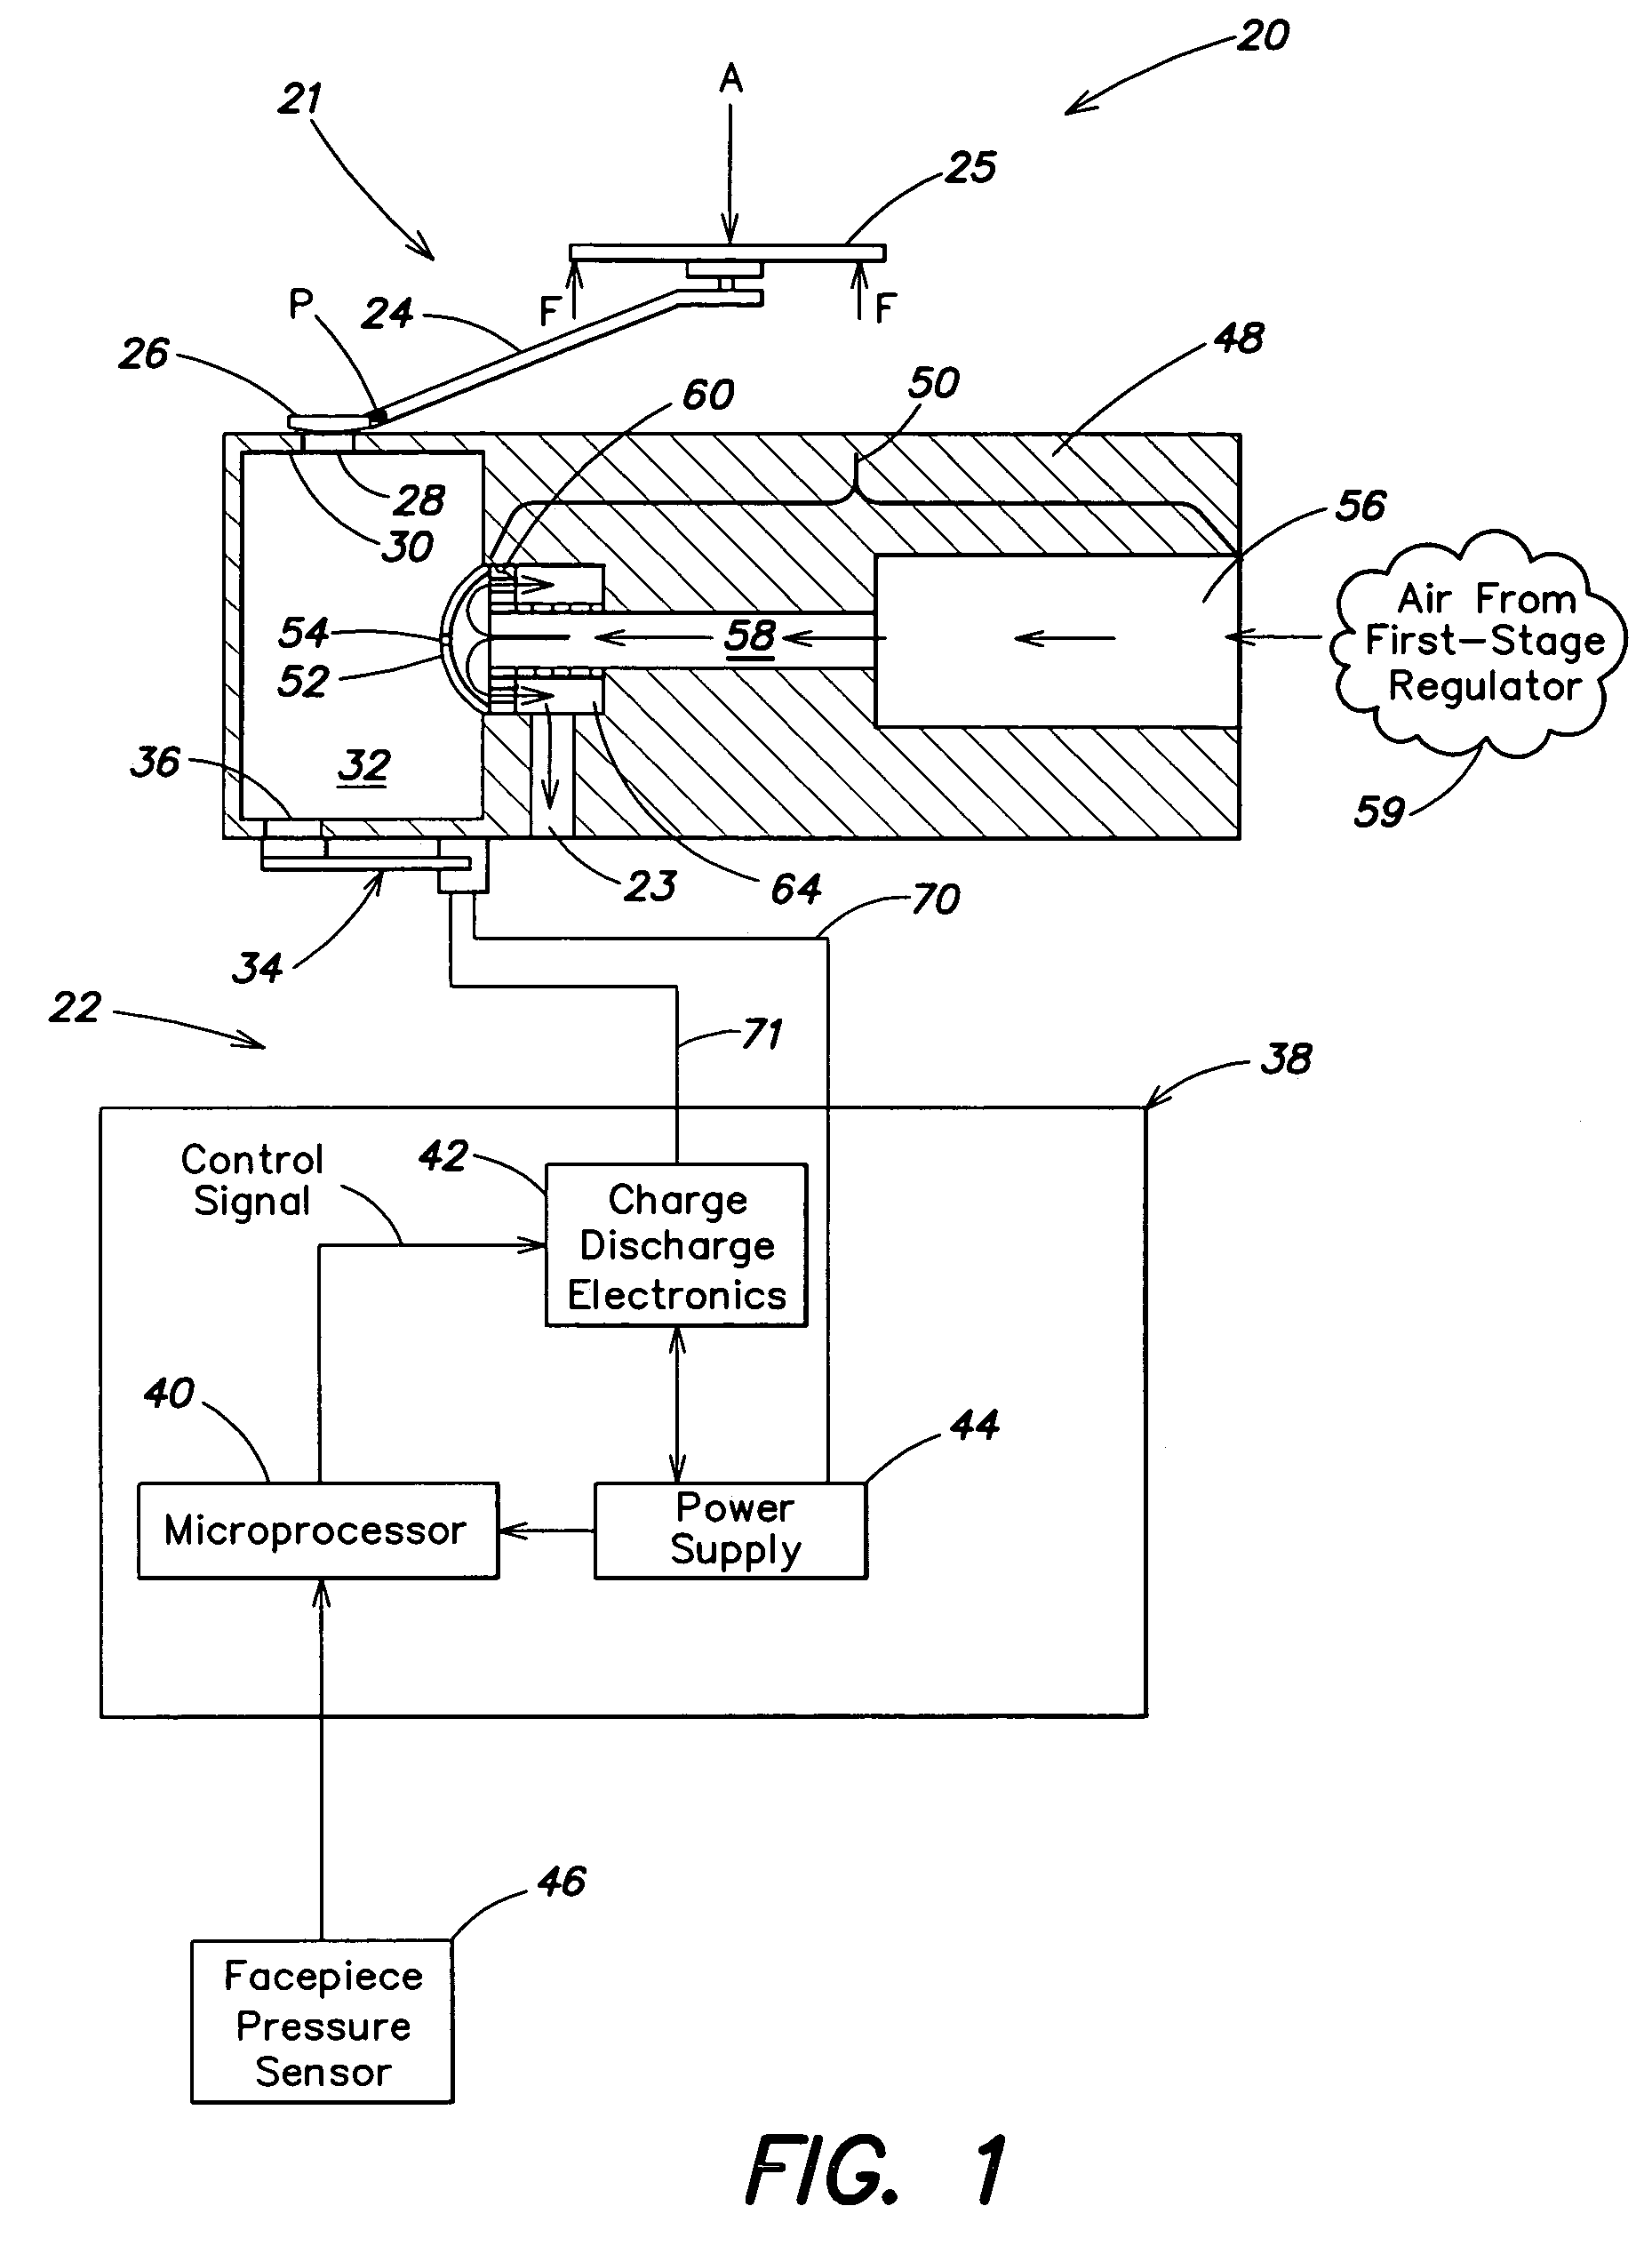 Electromechanically-assisted regulator control assembly